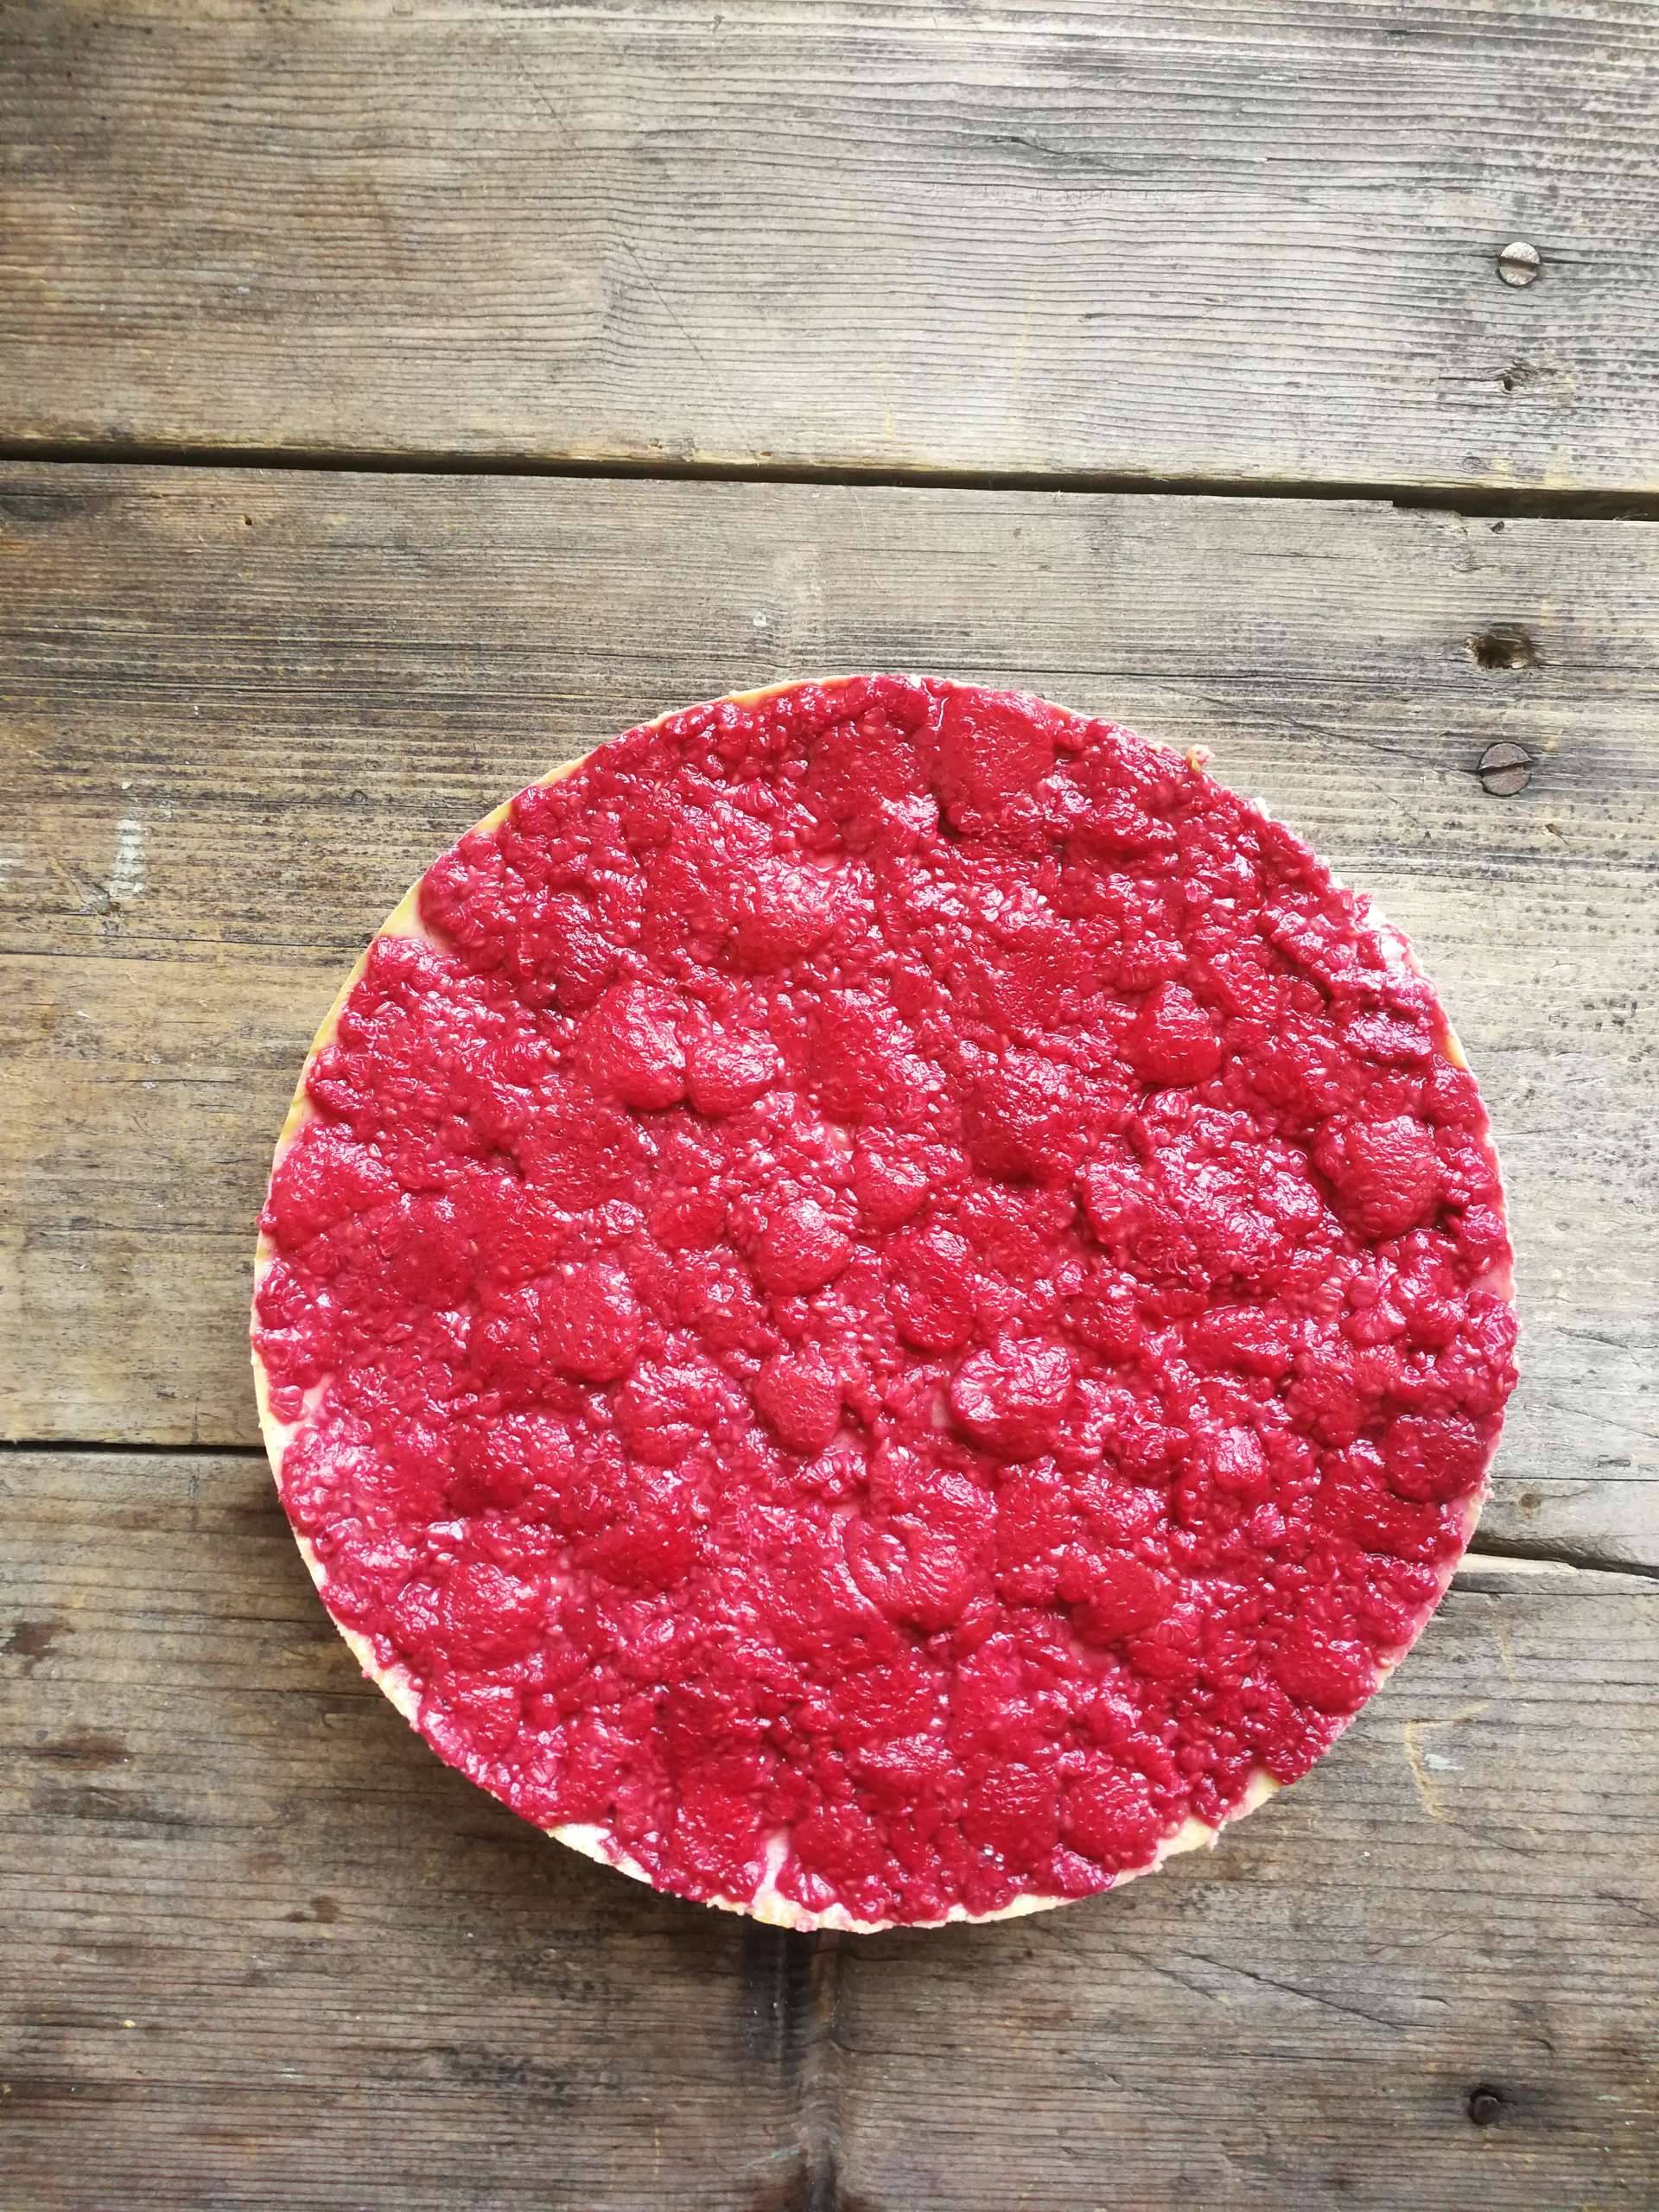 delicious raspberry cheesecake recipe